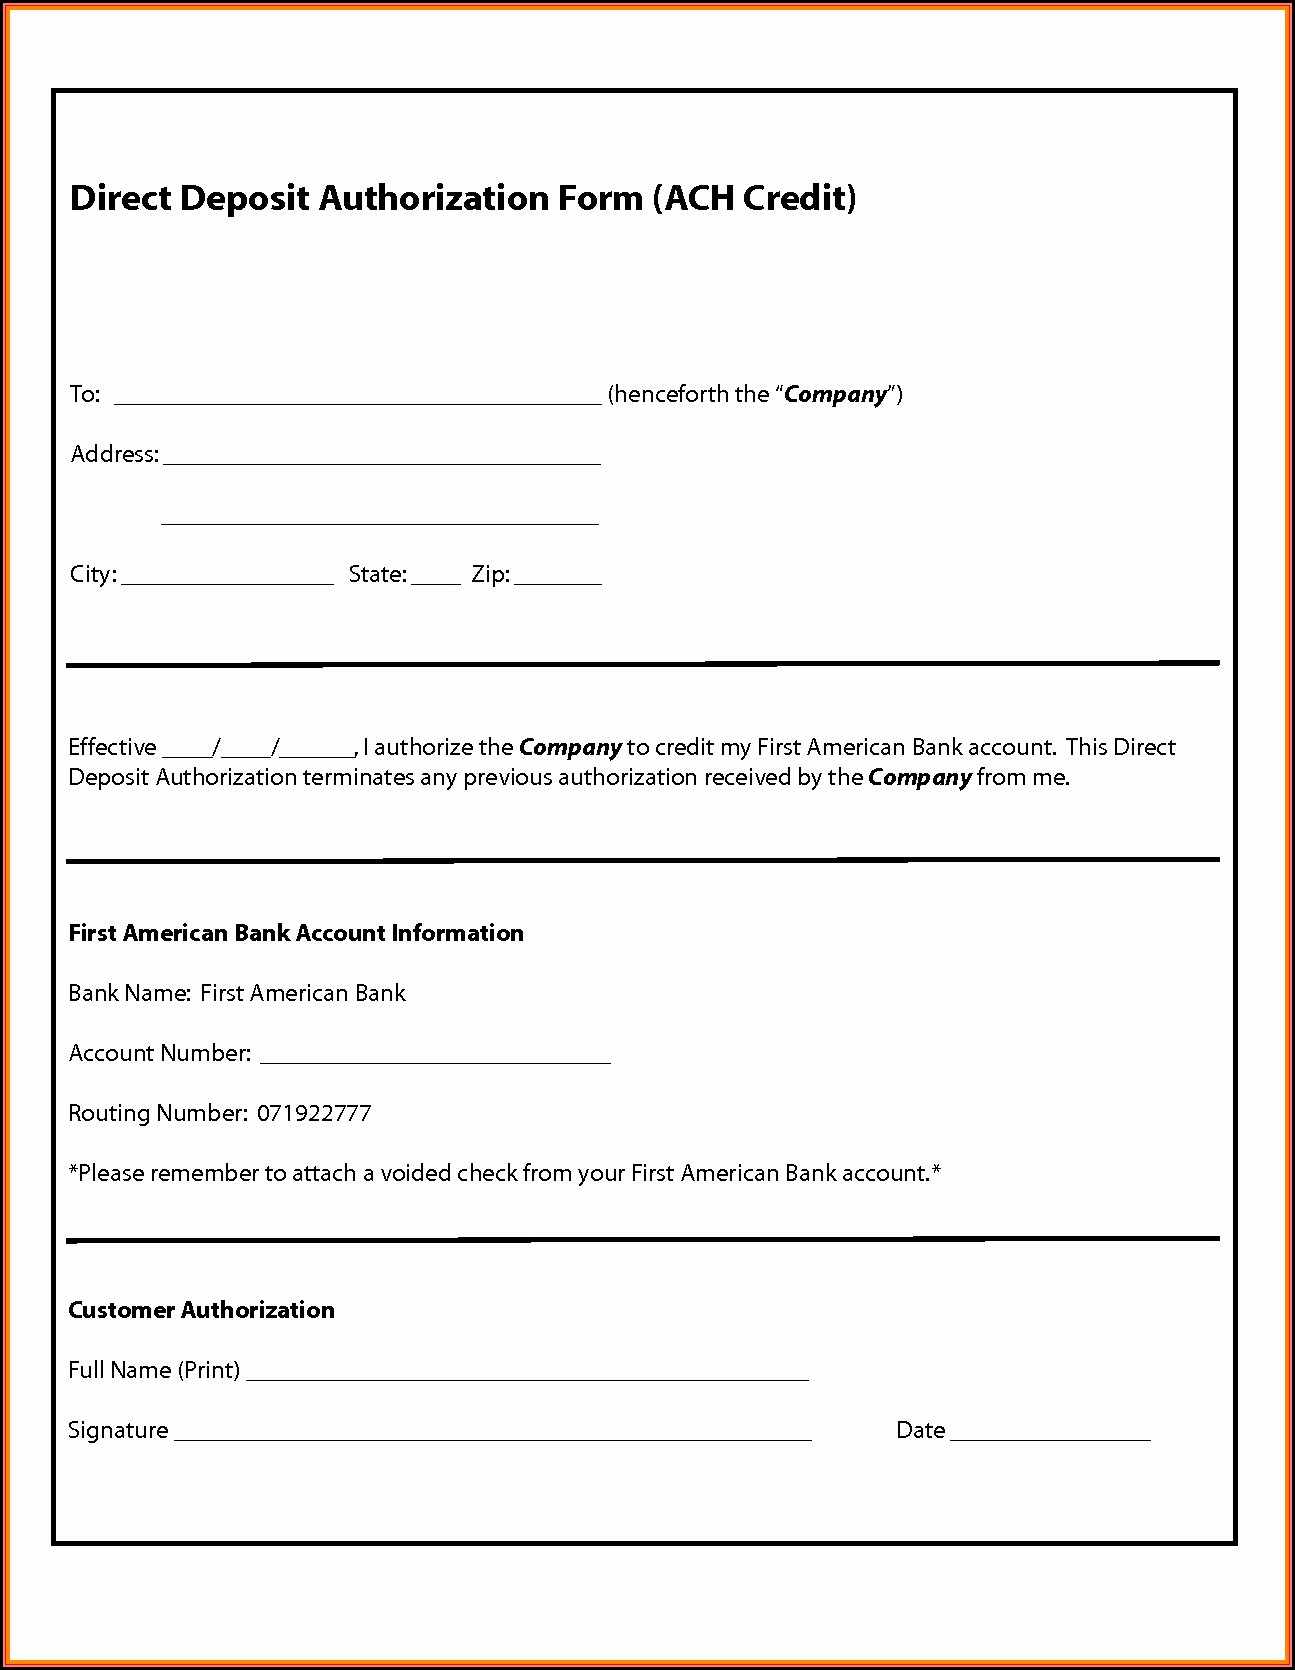 Vendor Ach Authorization Form Template